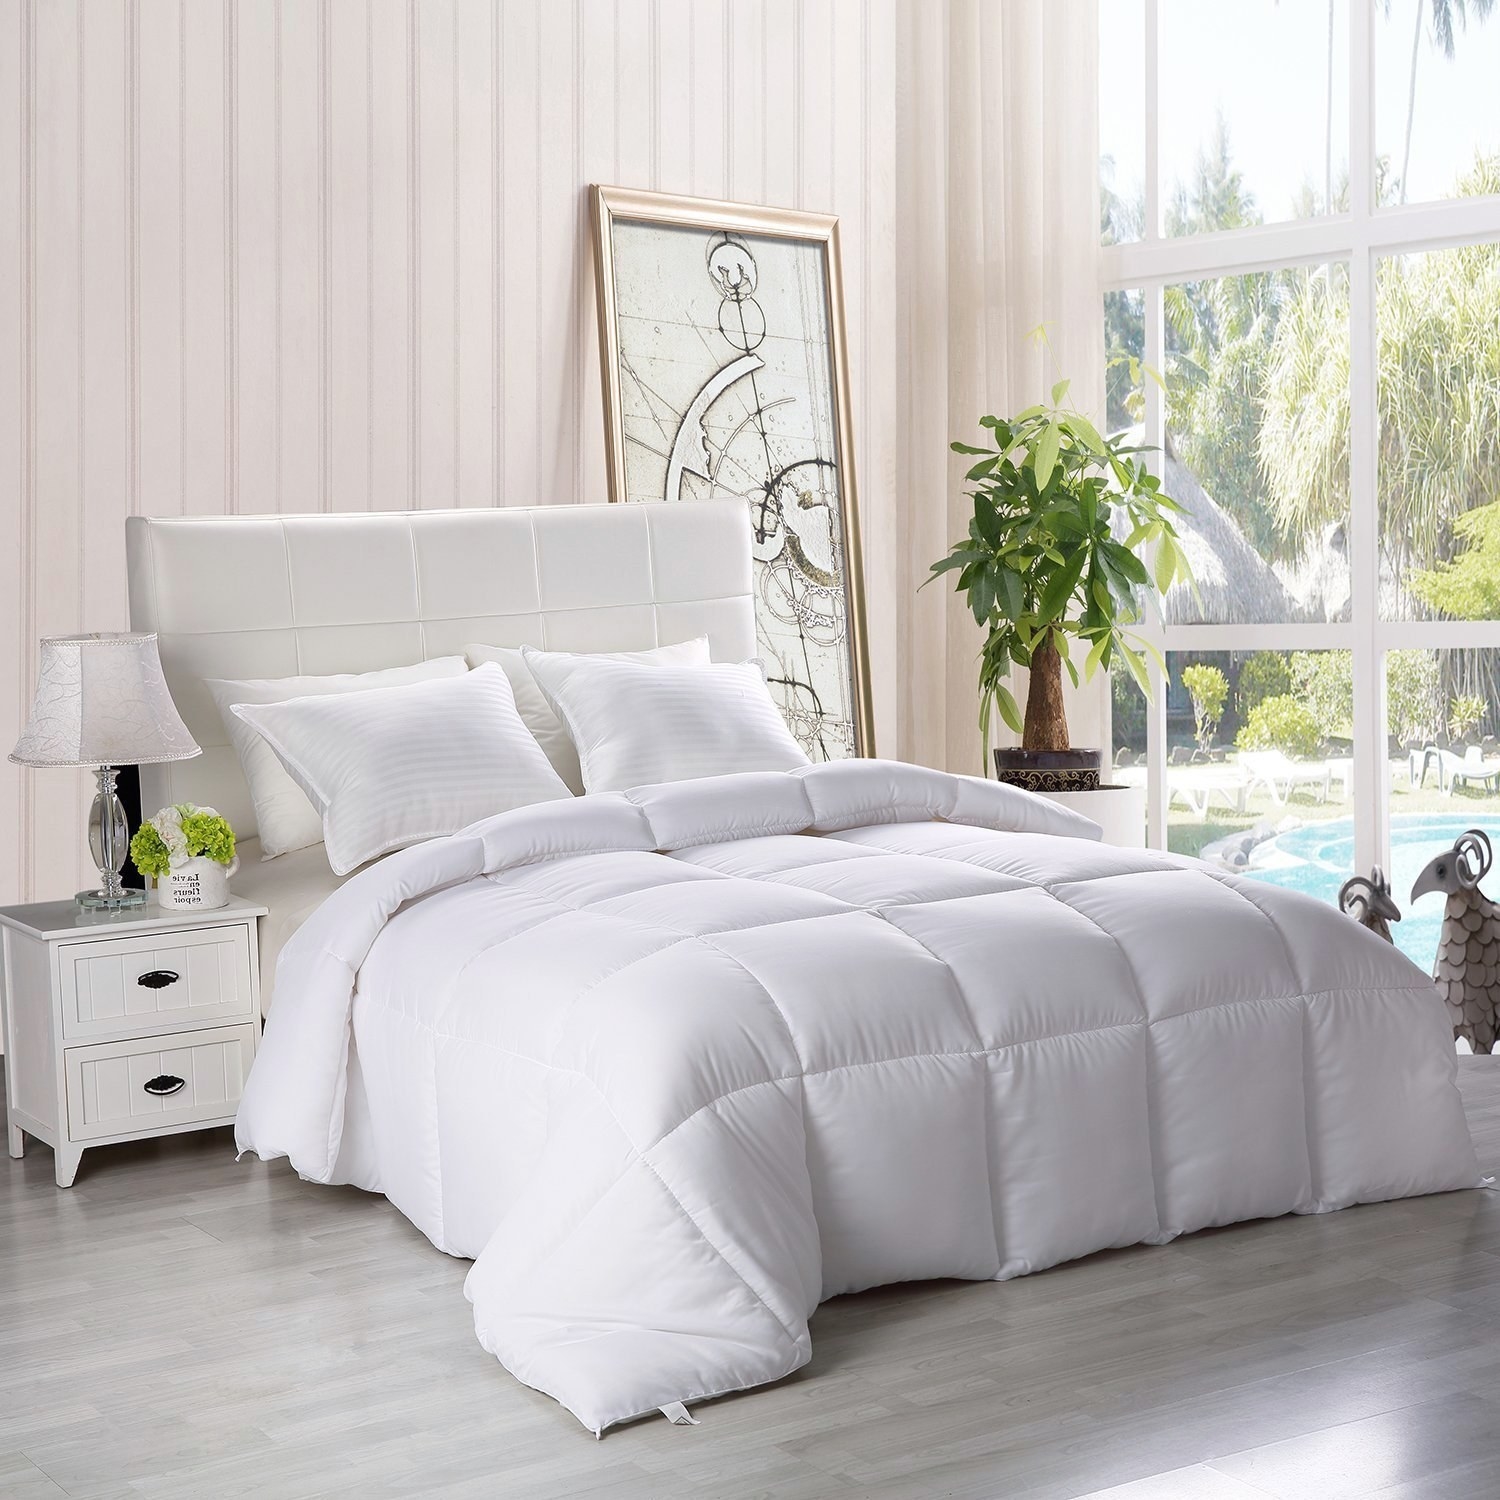 White comforter on mattress in bedroom